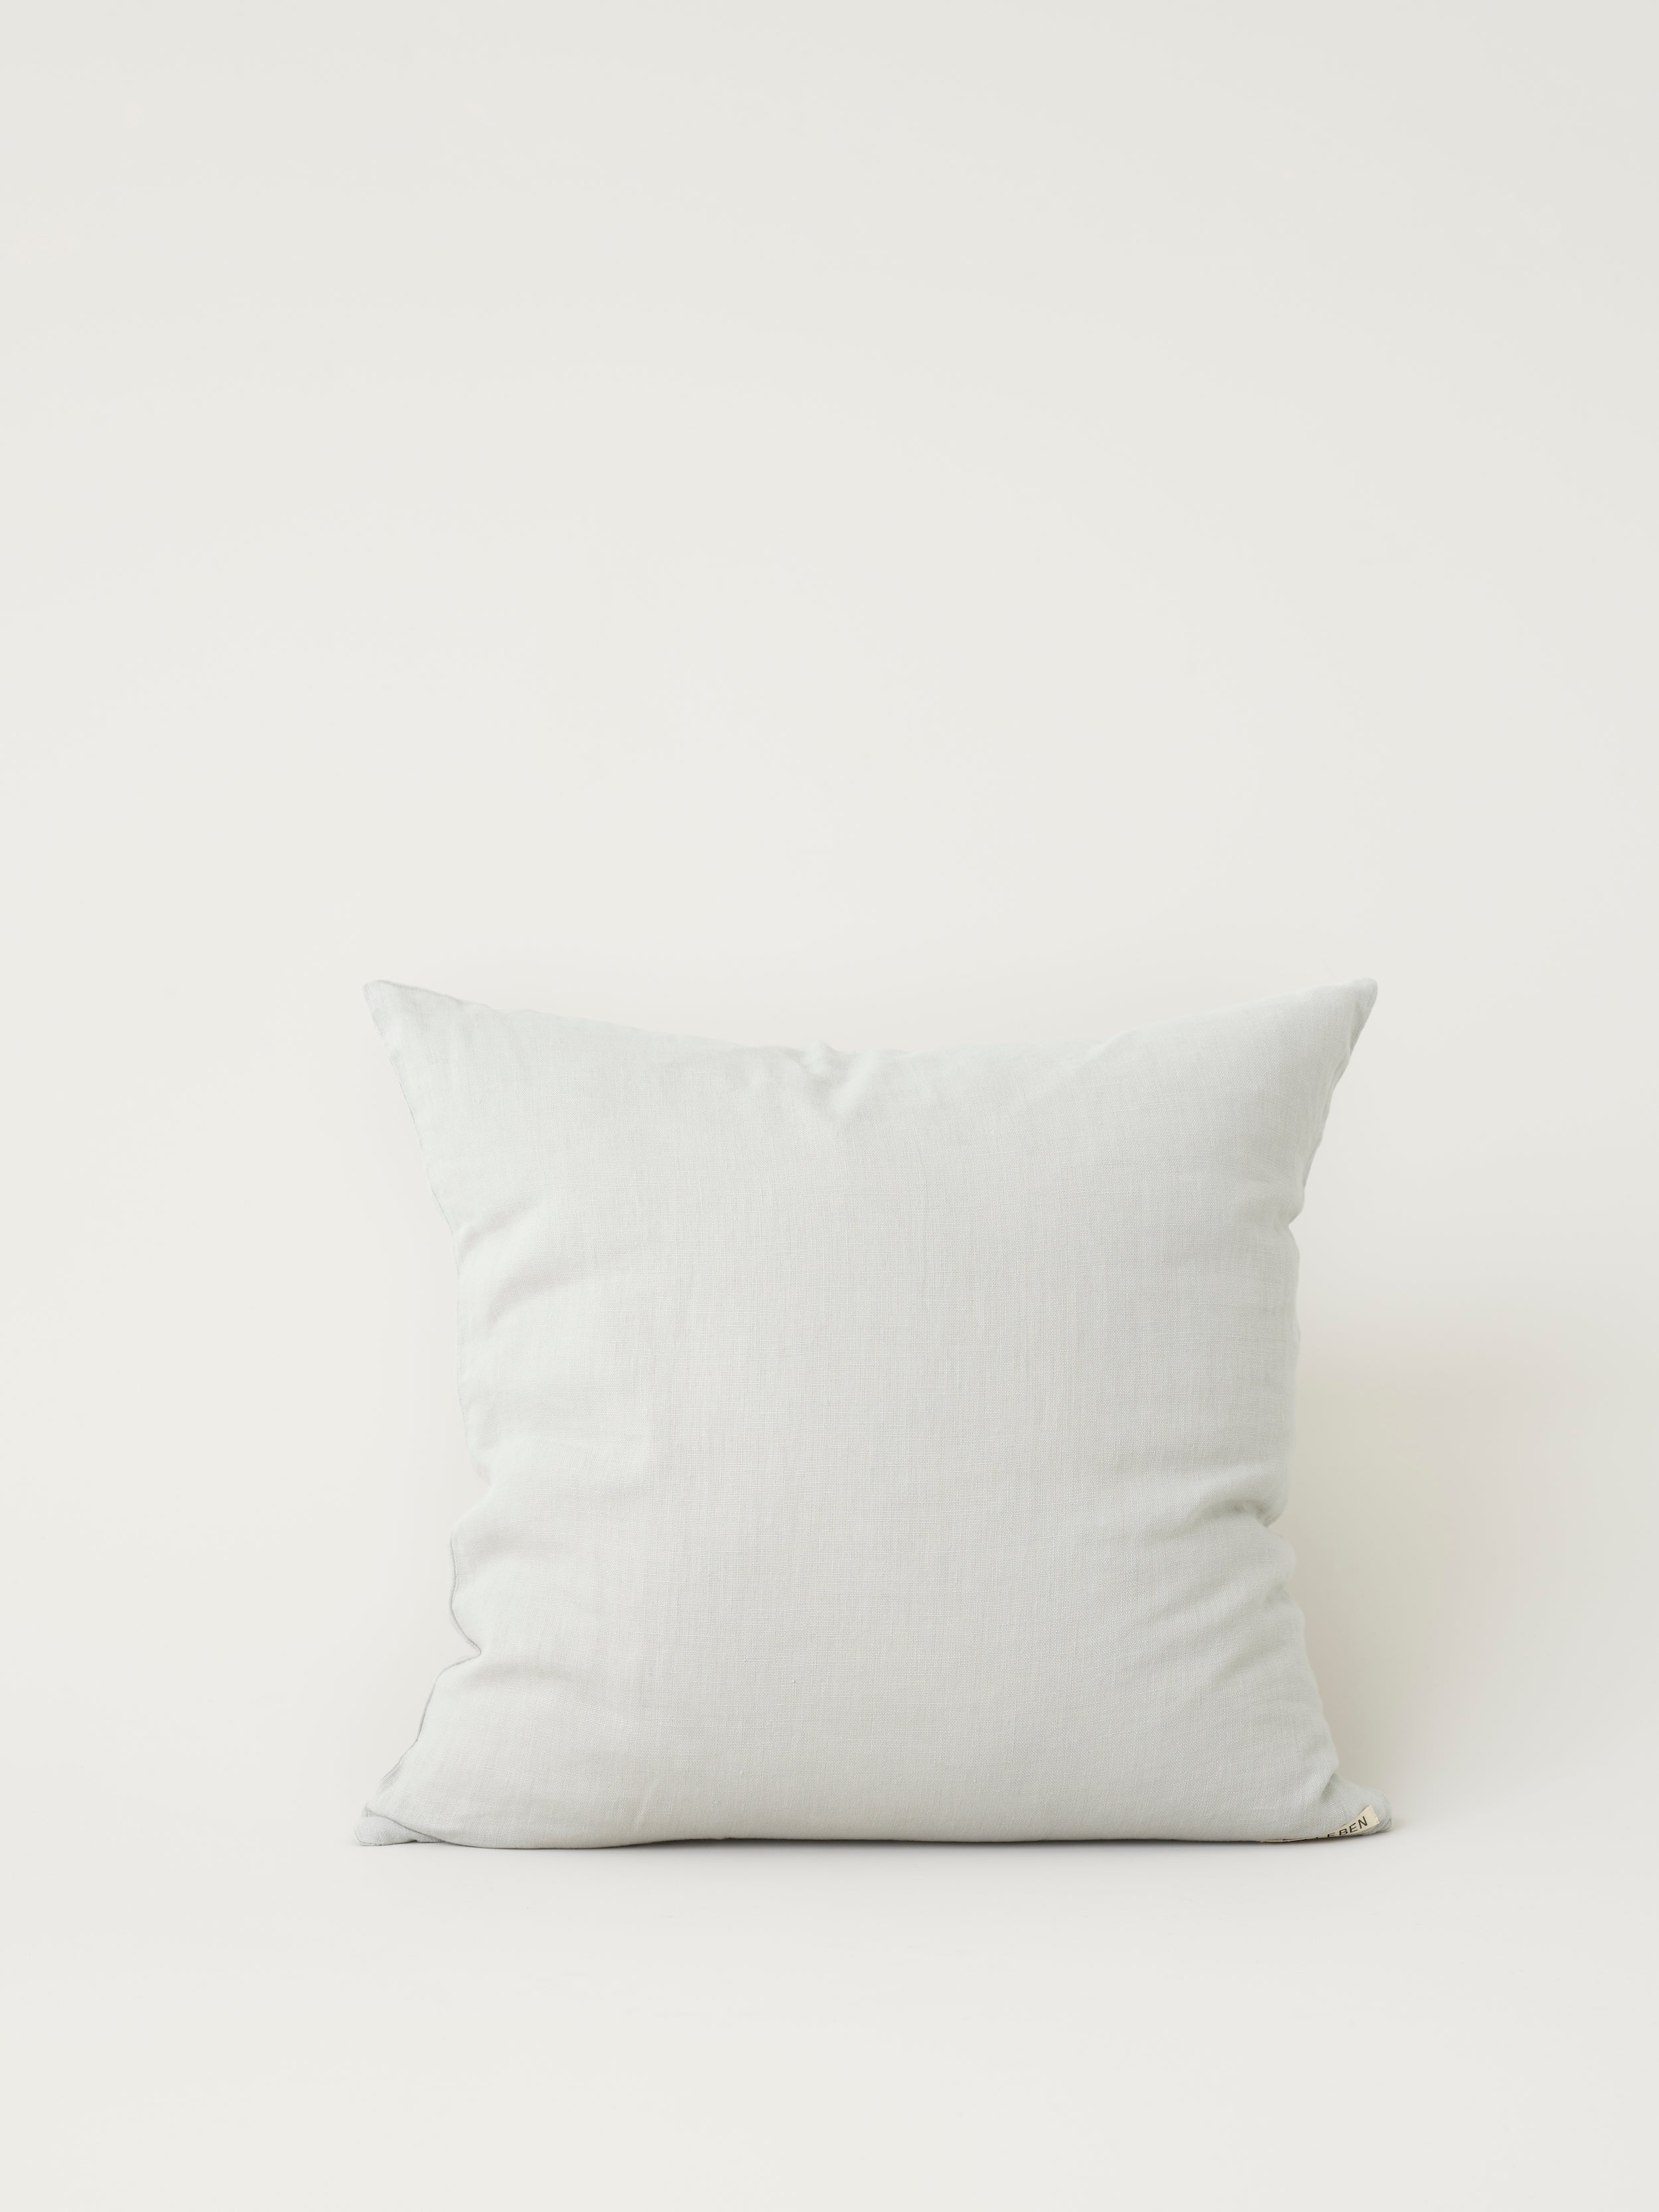 Stilleben cushion cover grey